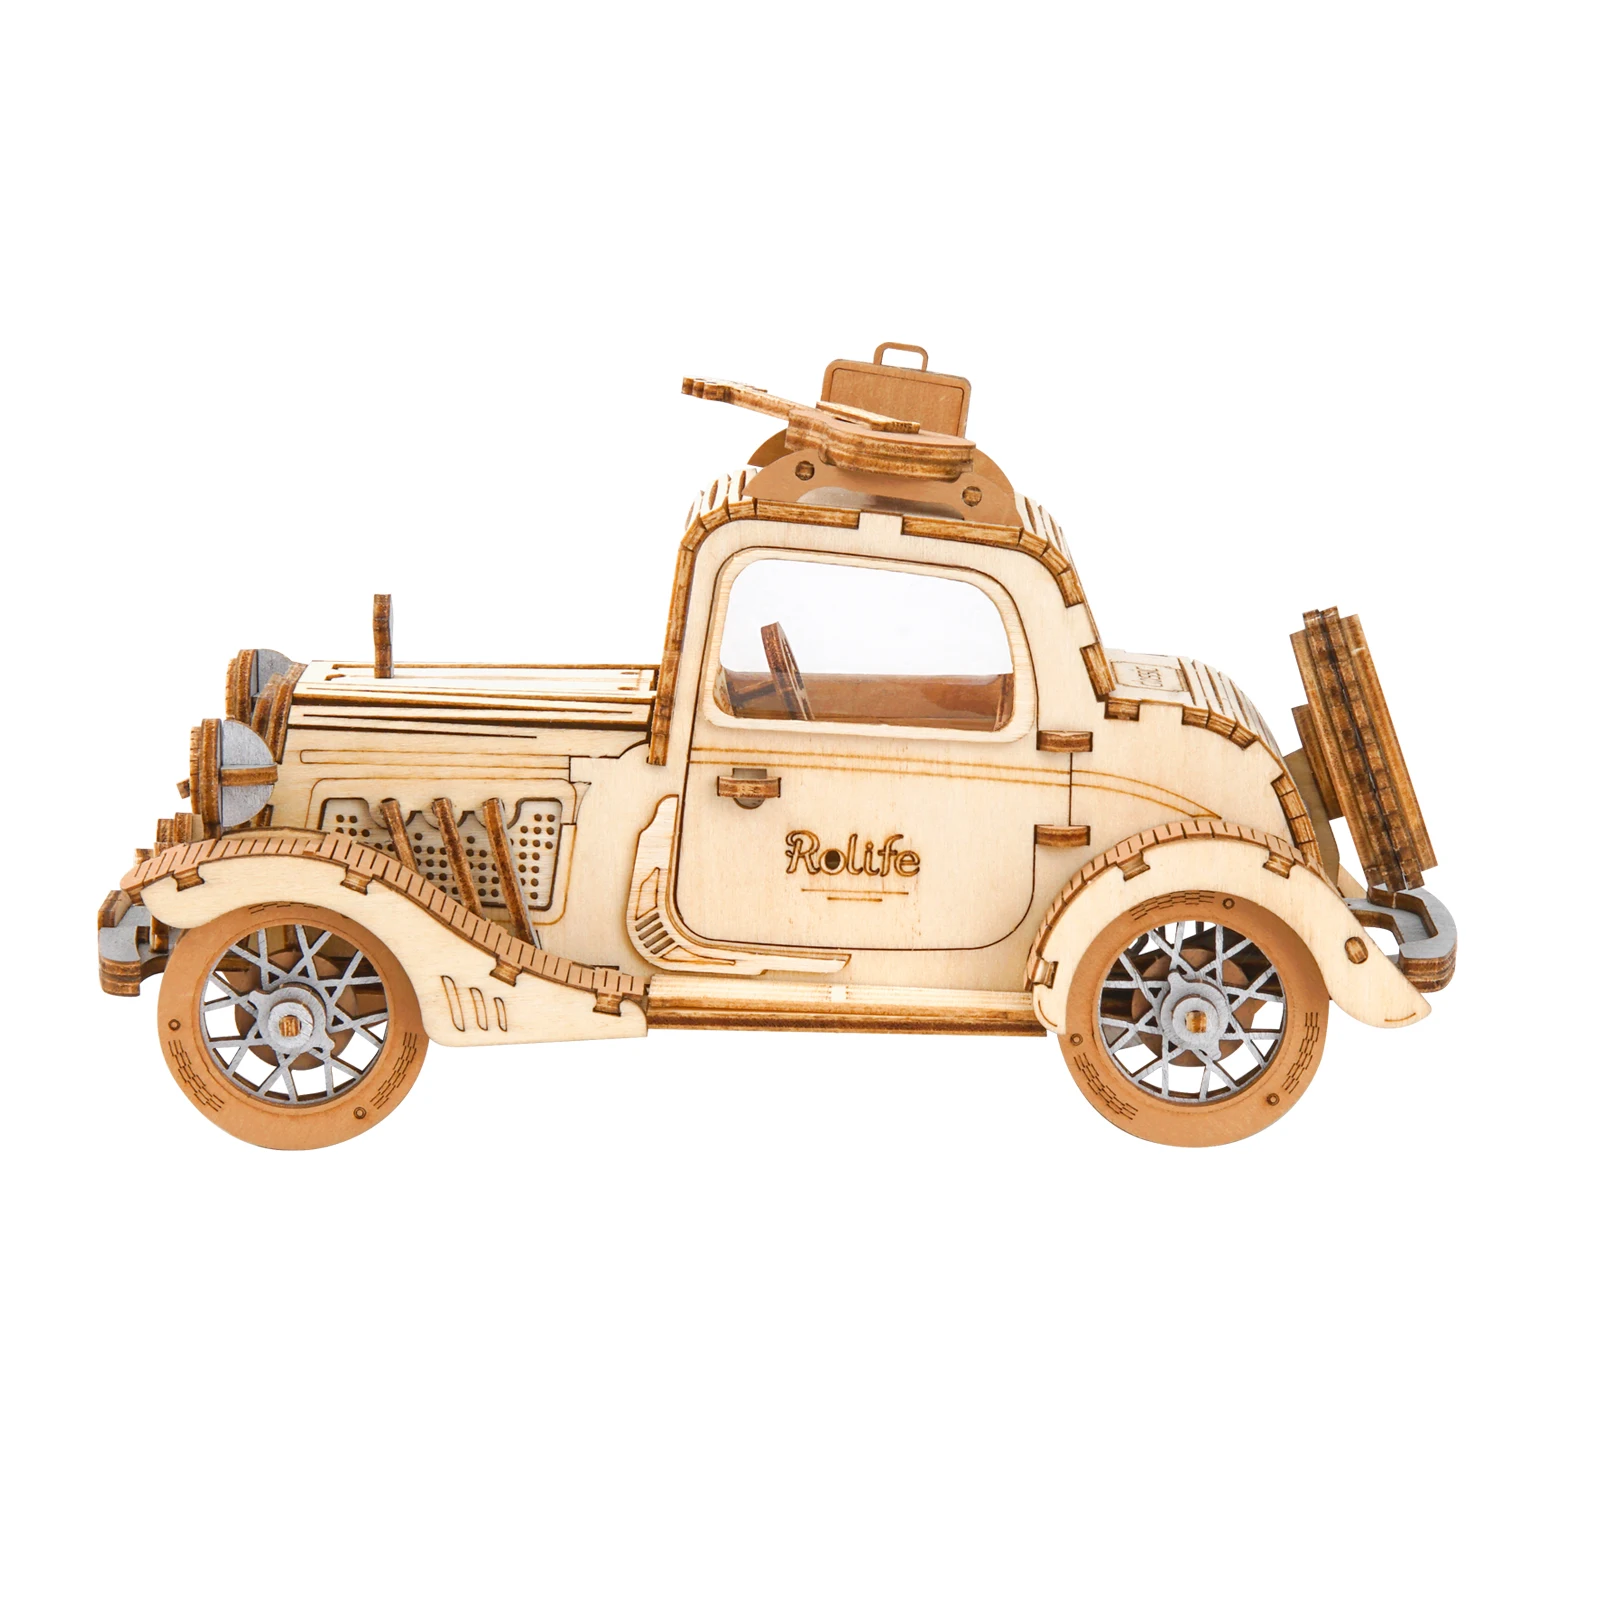 by Hands Craft Robotime Rolife Vintage Car 3D Wooden Puzzle Model 